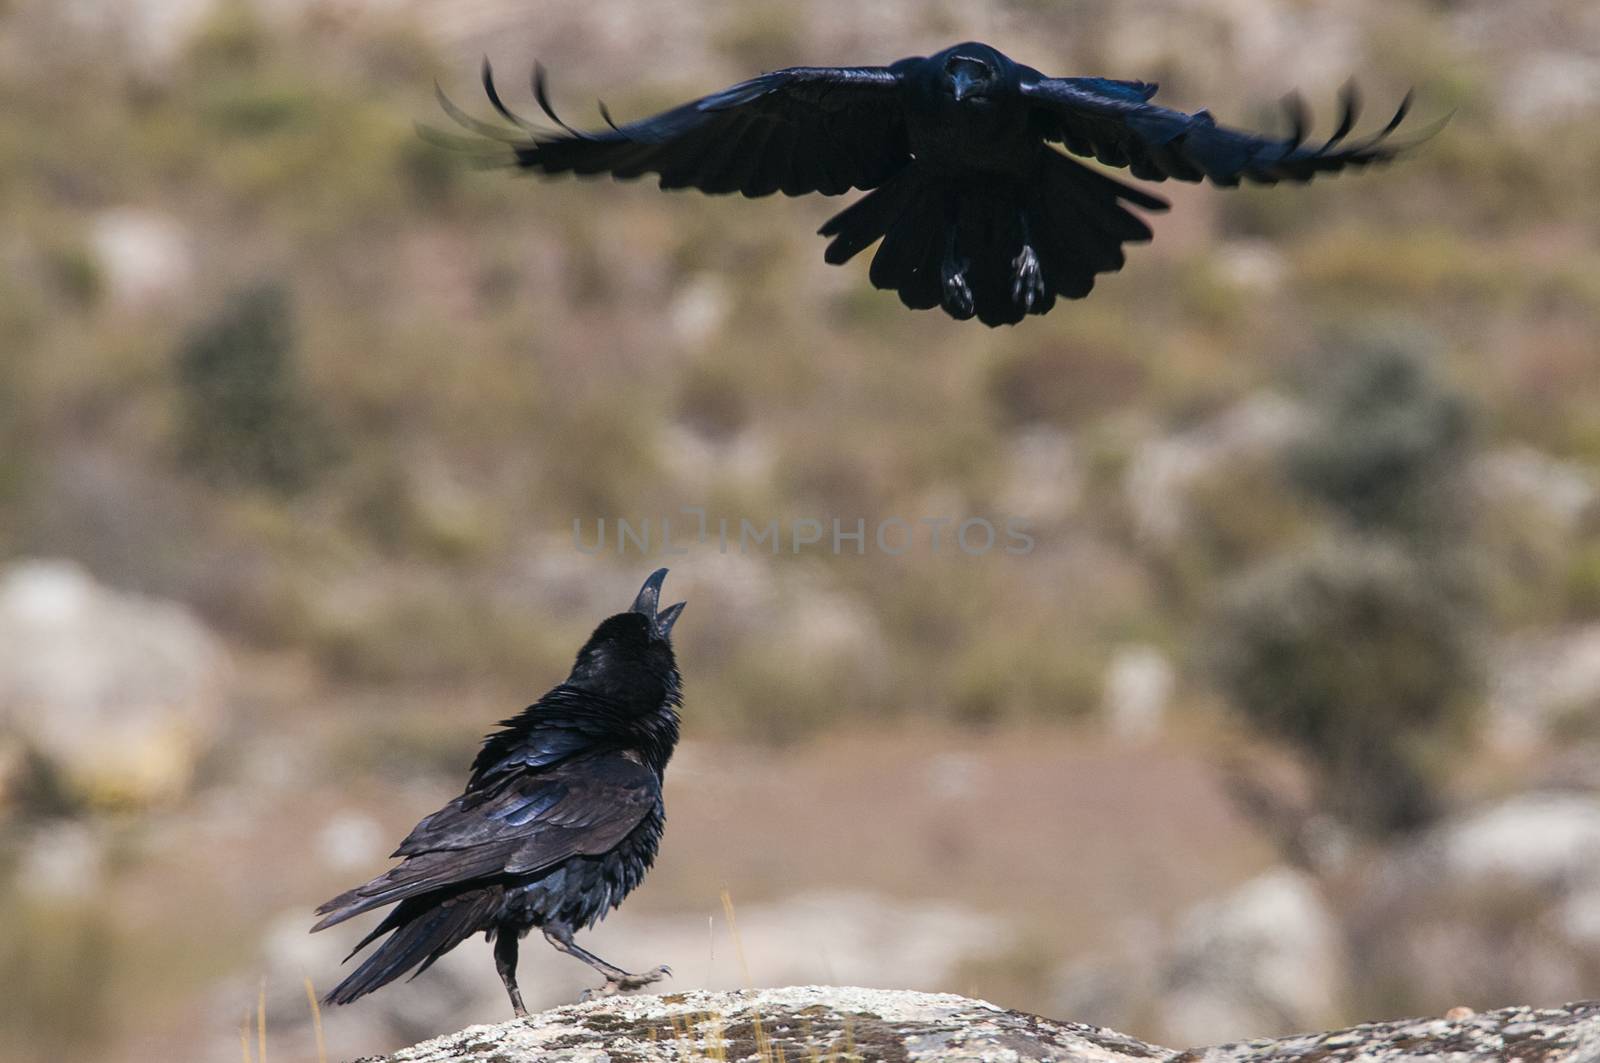 Raven - Corvus corax,  Flying portrait and social behavior by jalonsohu@gmail.com